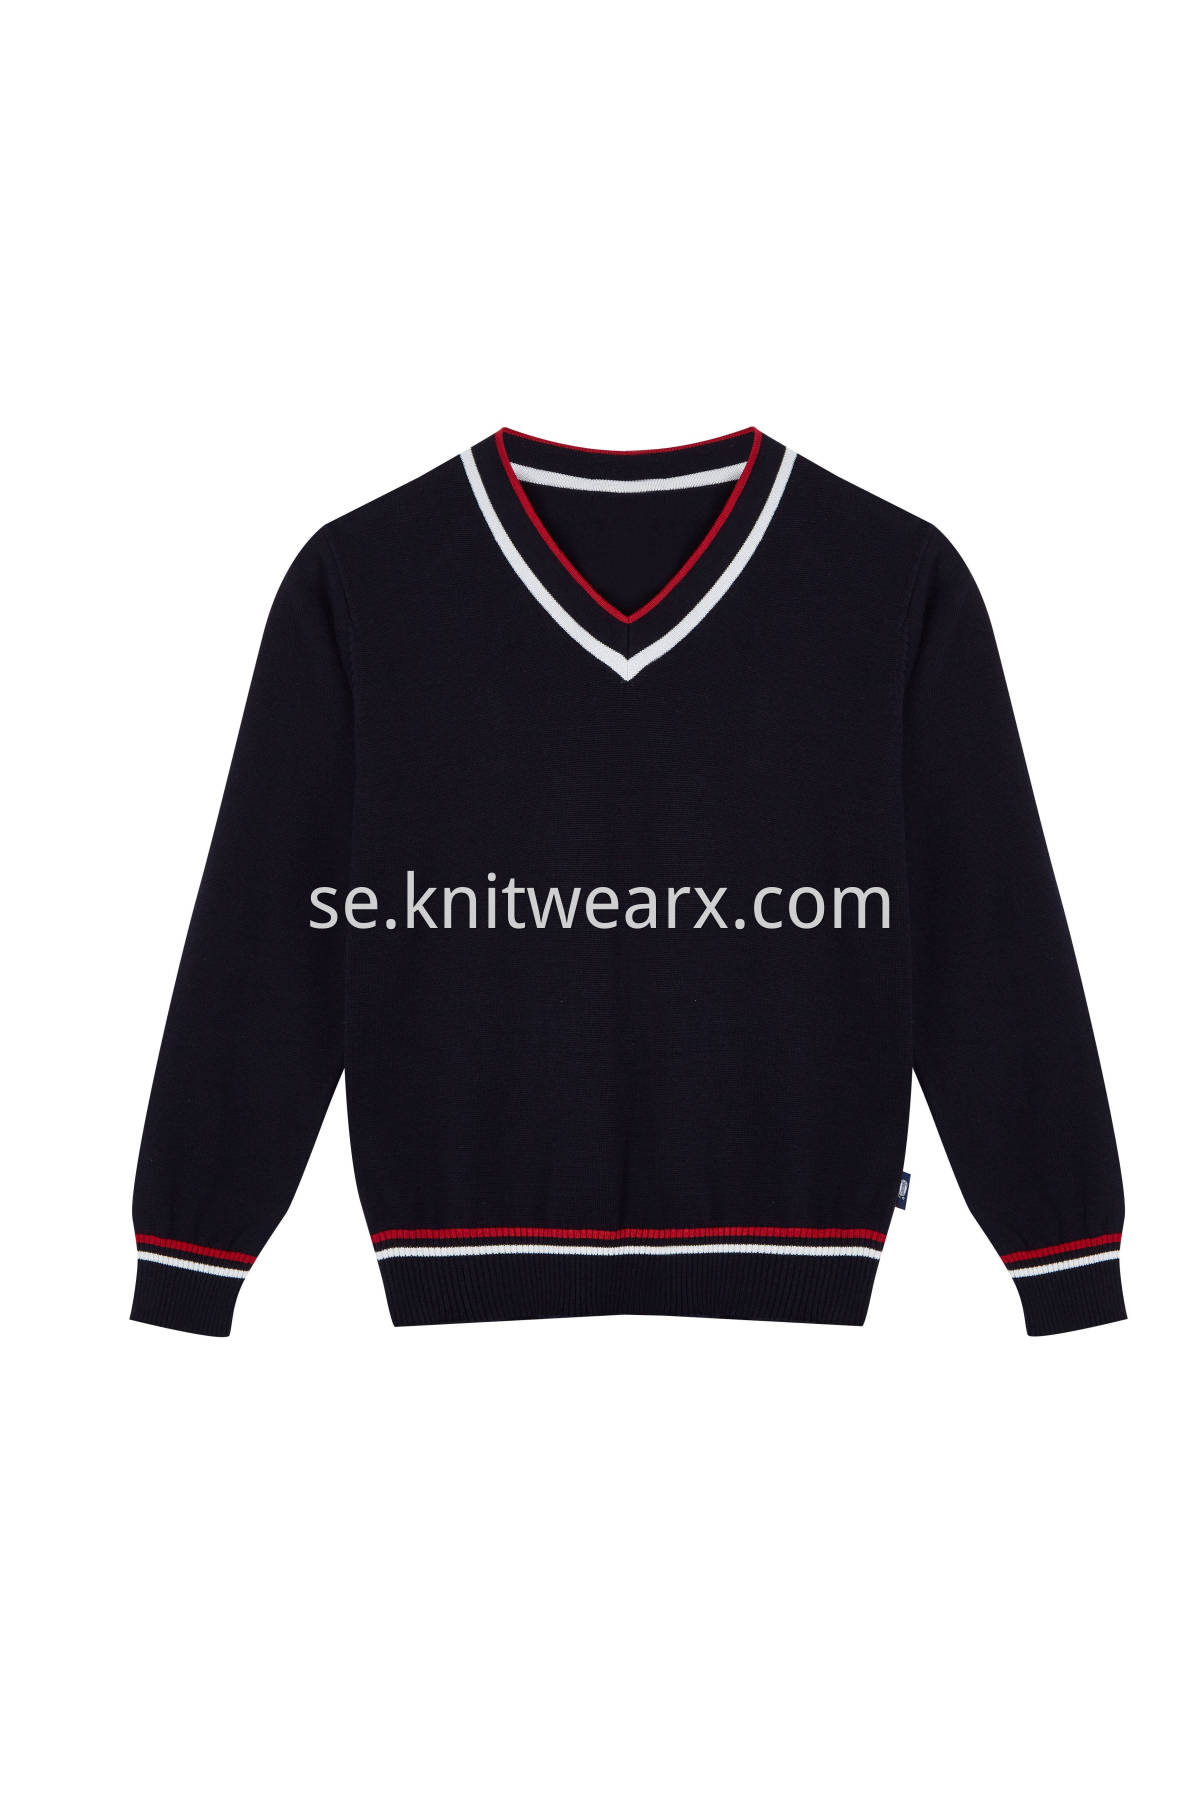 Kids's Sweater Vest Cotton V-Neck School Uniform Pullover Top